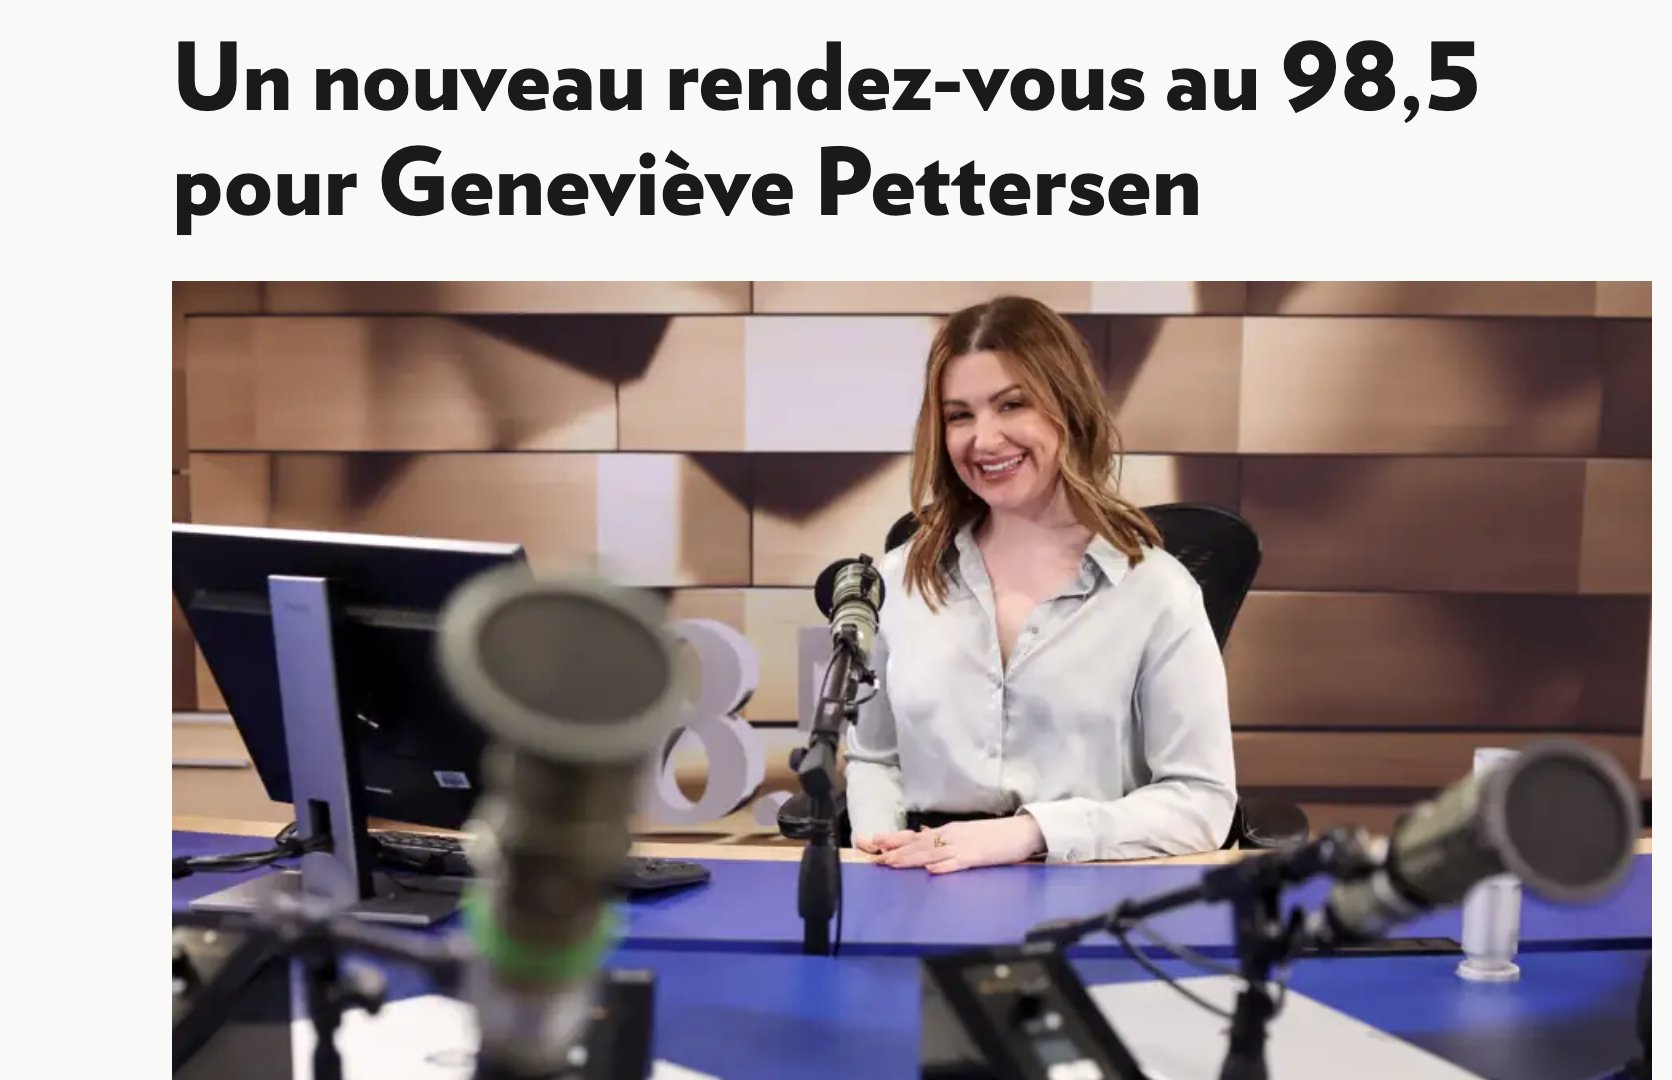 Genevieve Pettersen 98.5